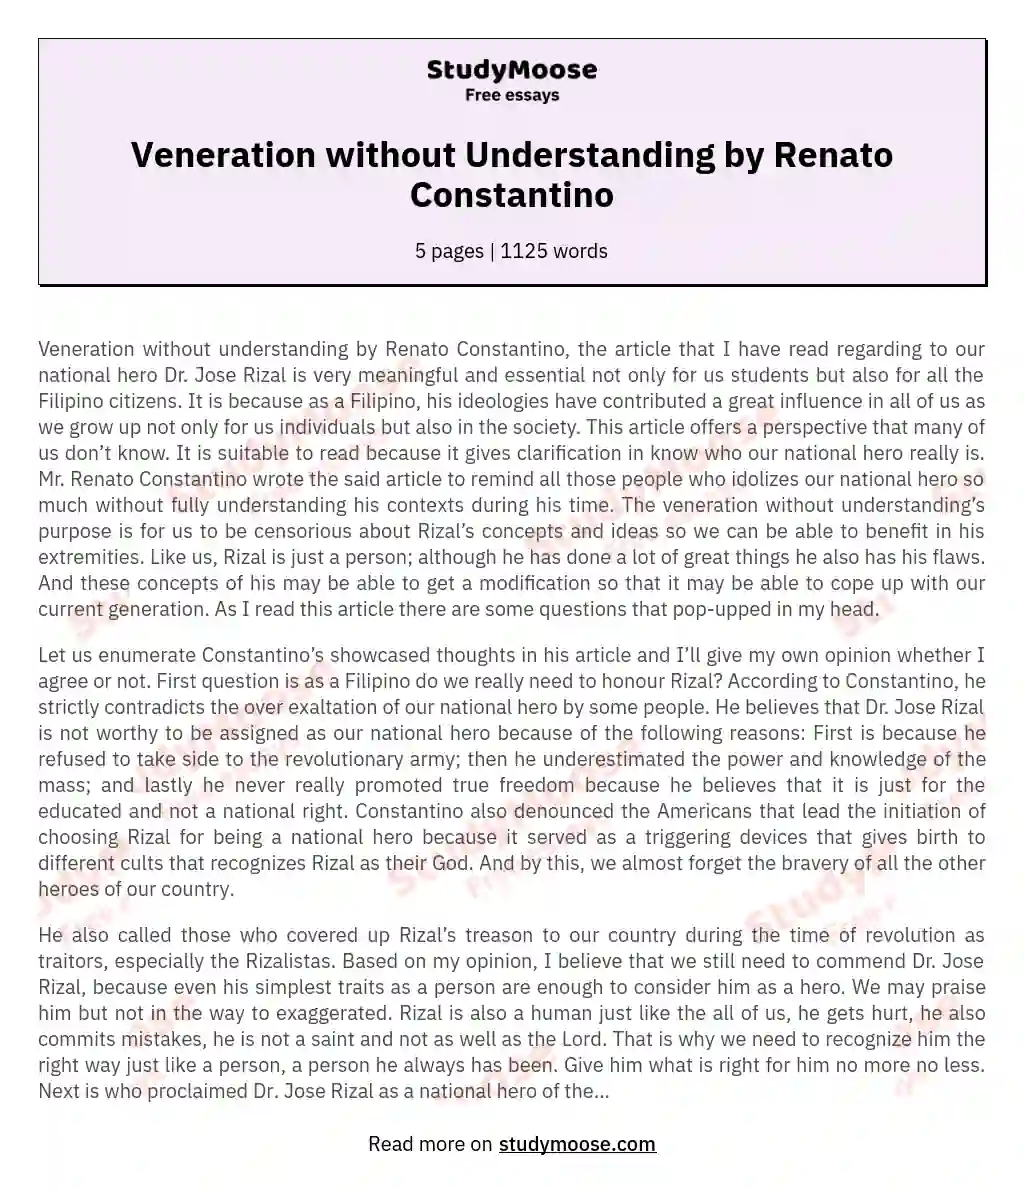 Veneration without Understanding by Renato Constantino essay